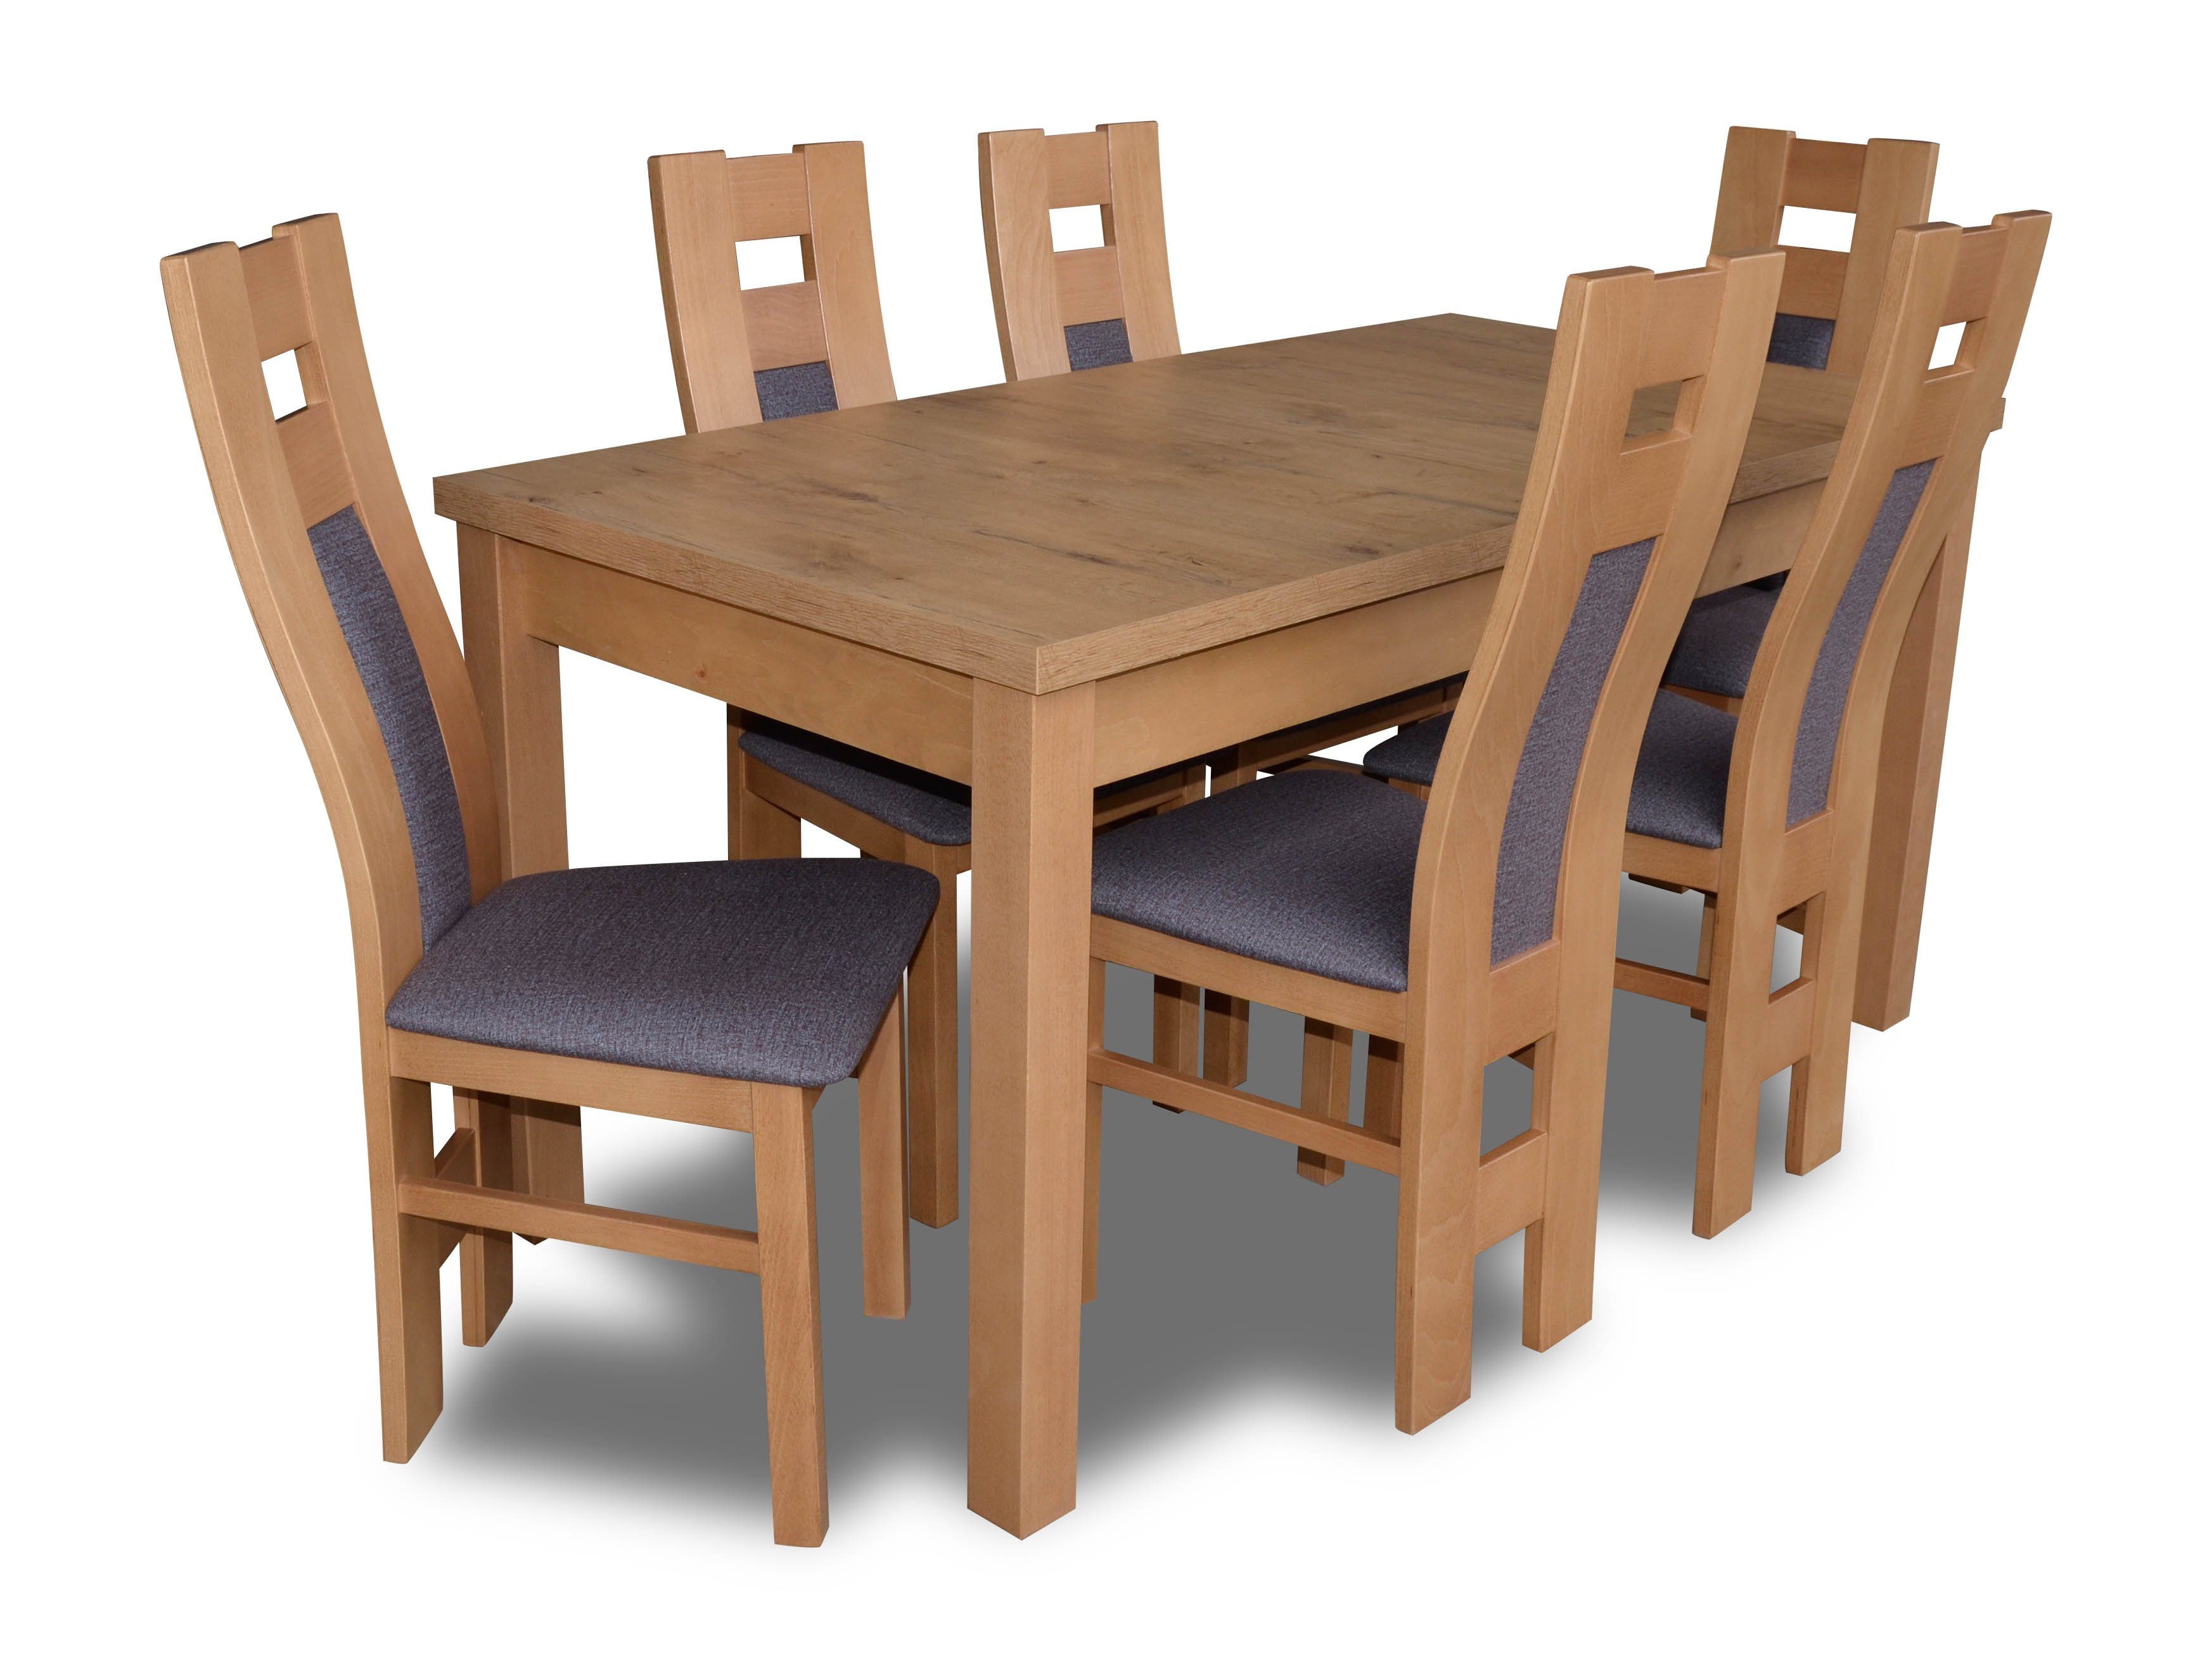 Beautysofa Sitzgruppe Essgruppe Tisch- und 6 Stuhl-Set Tischgruppe Laminat Tischplatte | Kinder Sitzgruppen